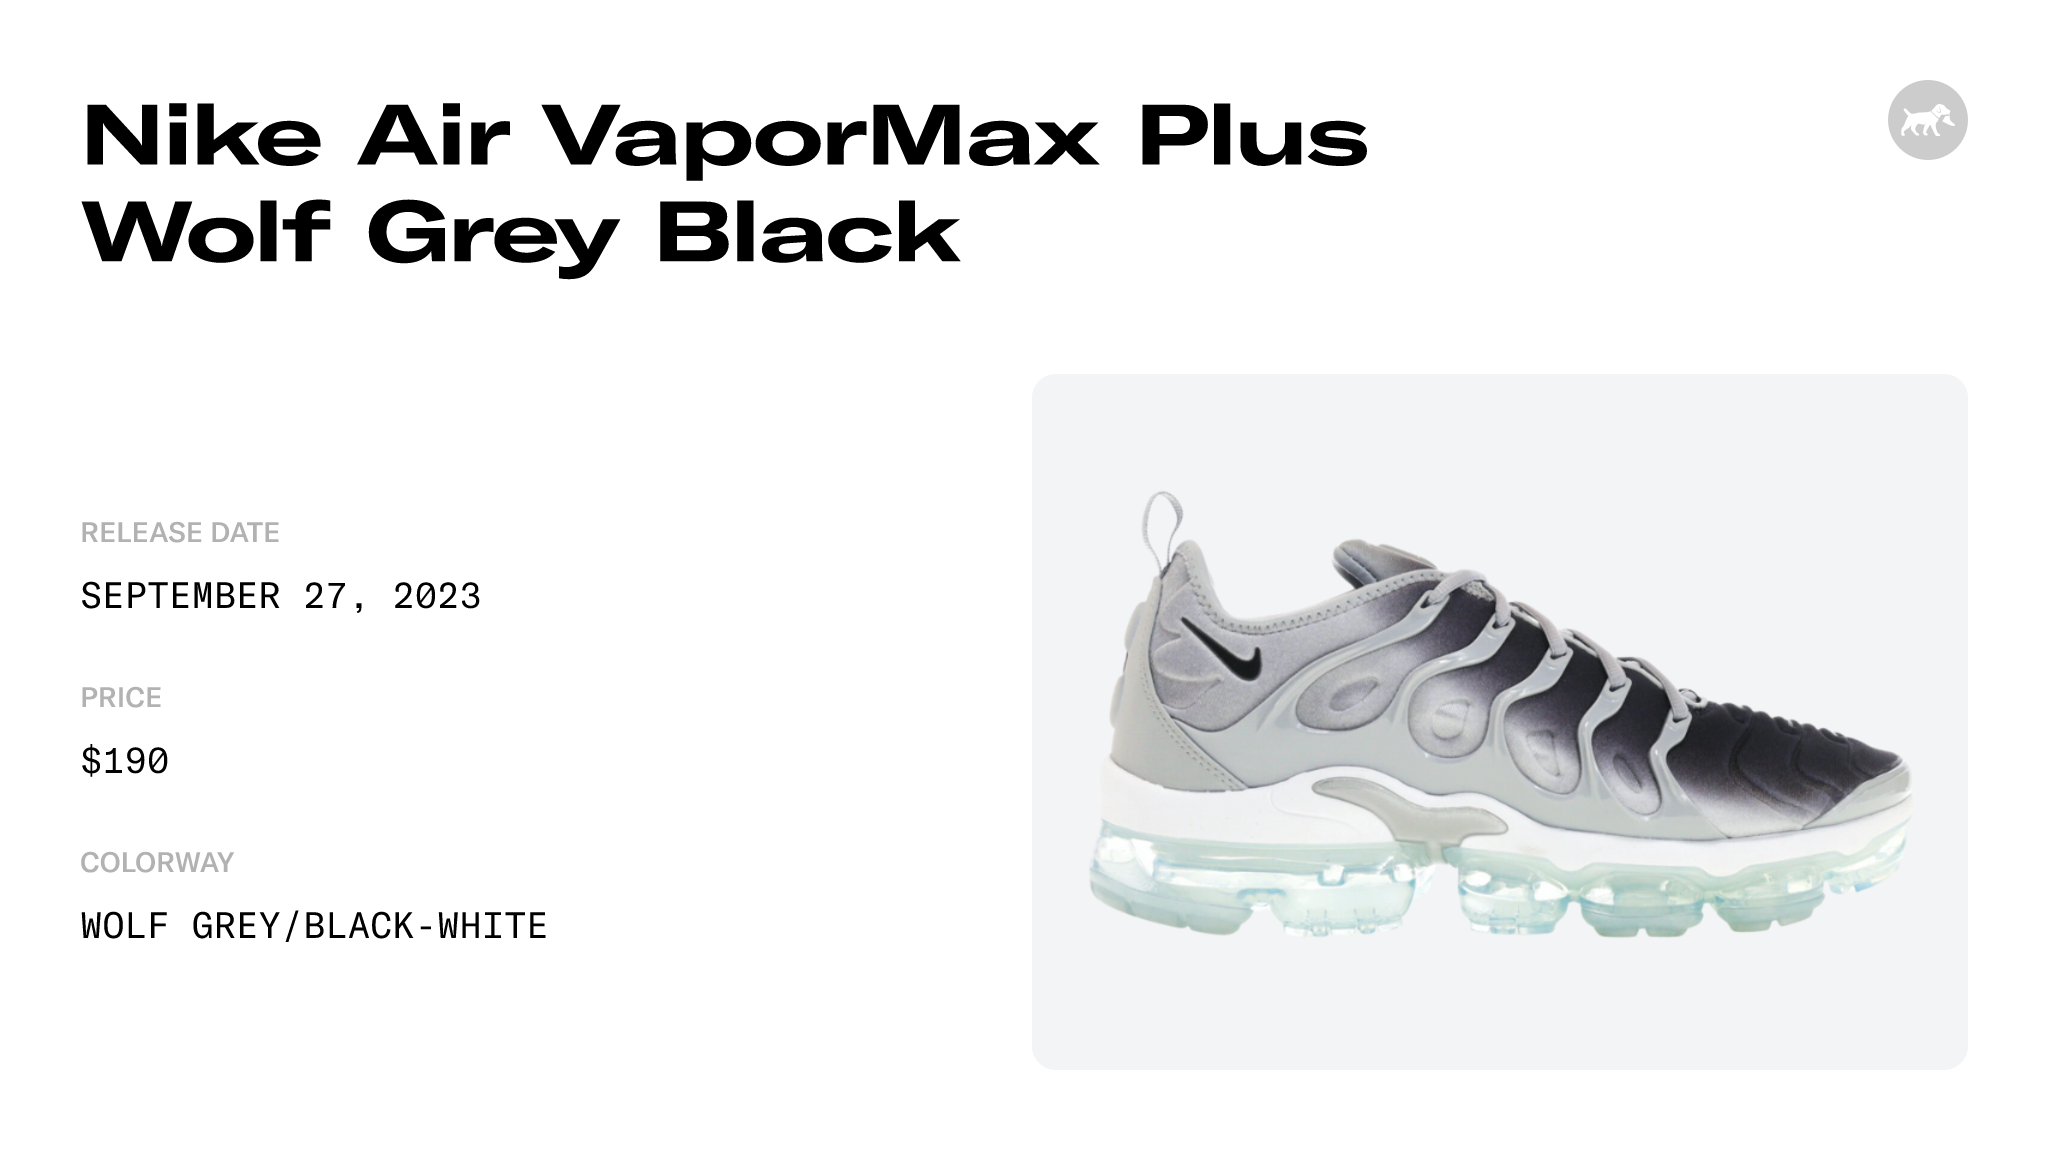 Nike Air VaporMax Plus 'Wolf Grey